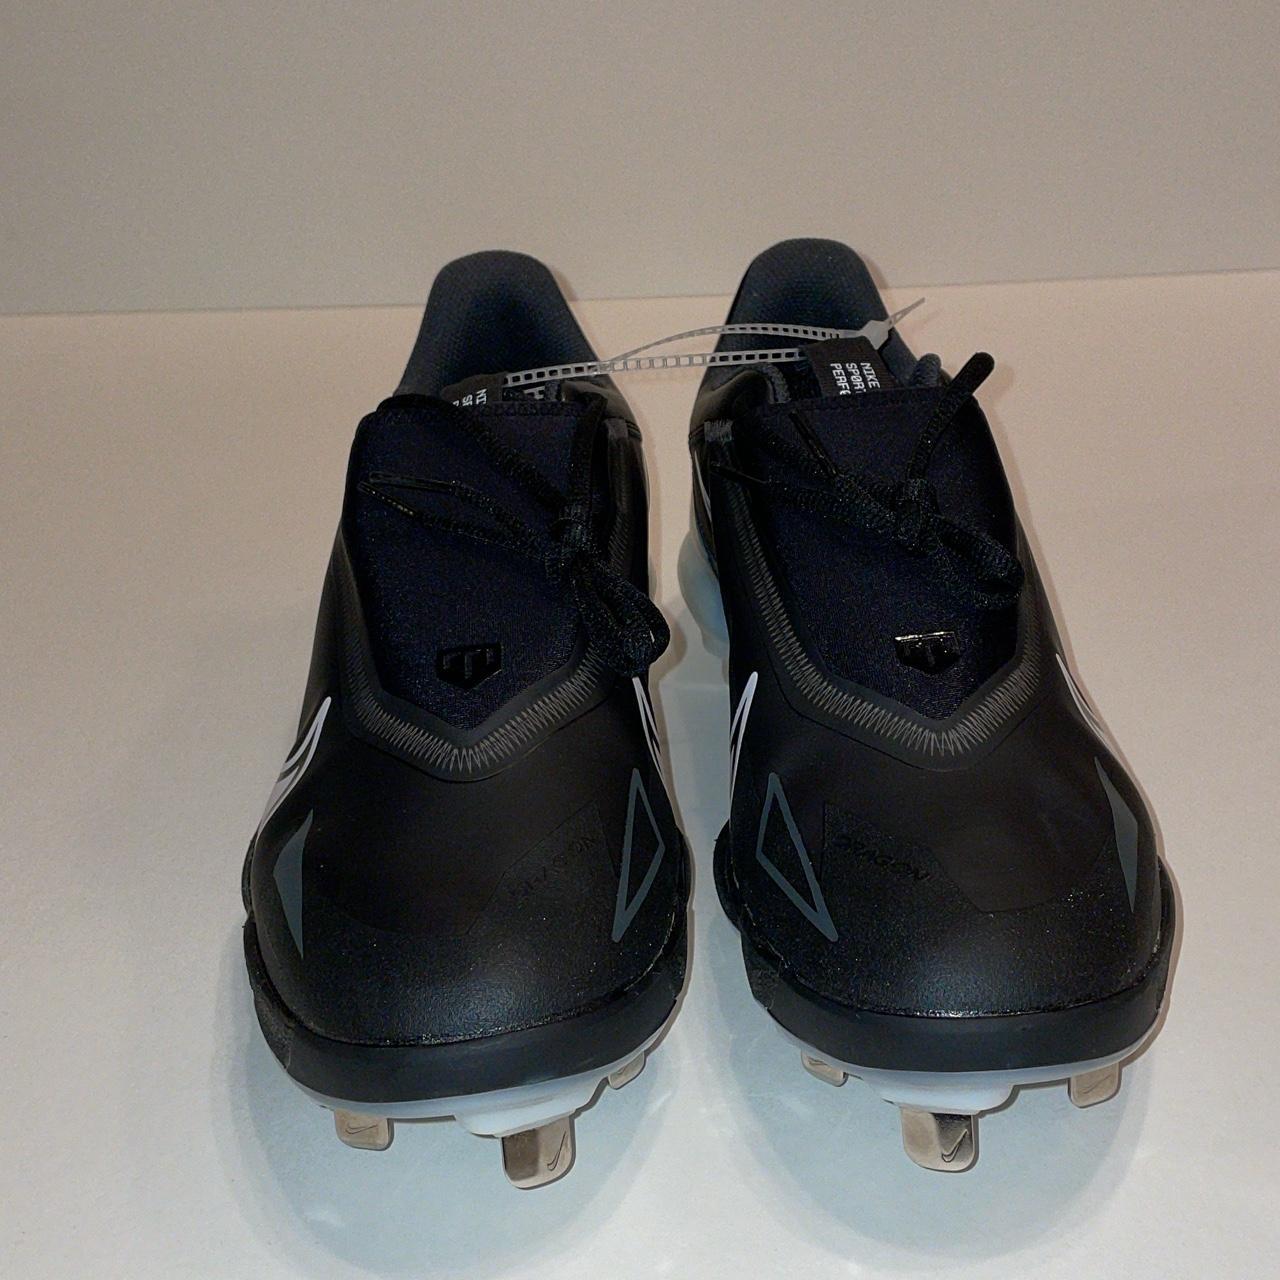 Nike Men's Force Zoom Trout 8 Elite Metal Baseball Cleats, Size 10.5, Black/Grey